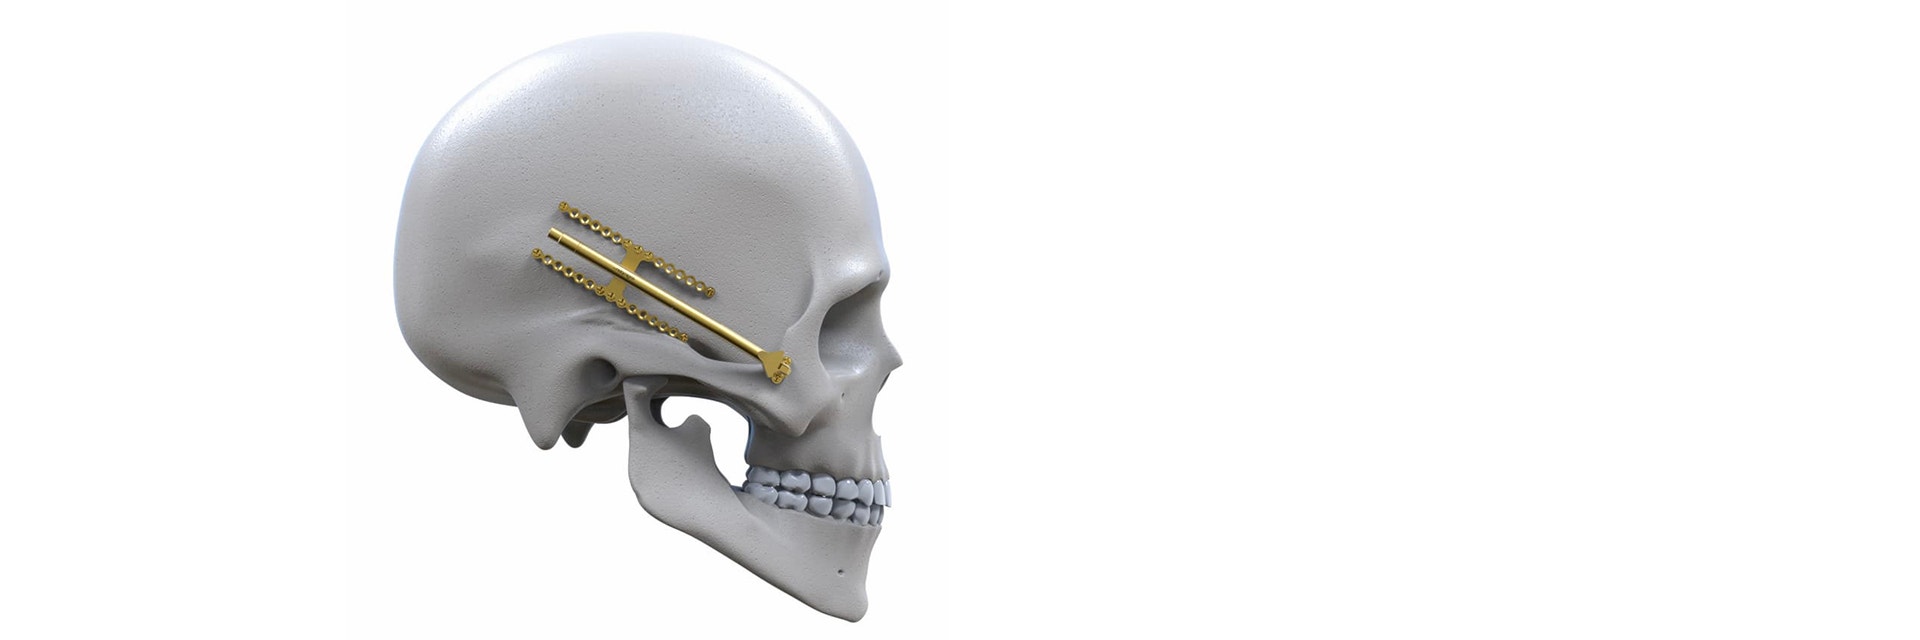 Engimplan implants in the skull